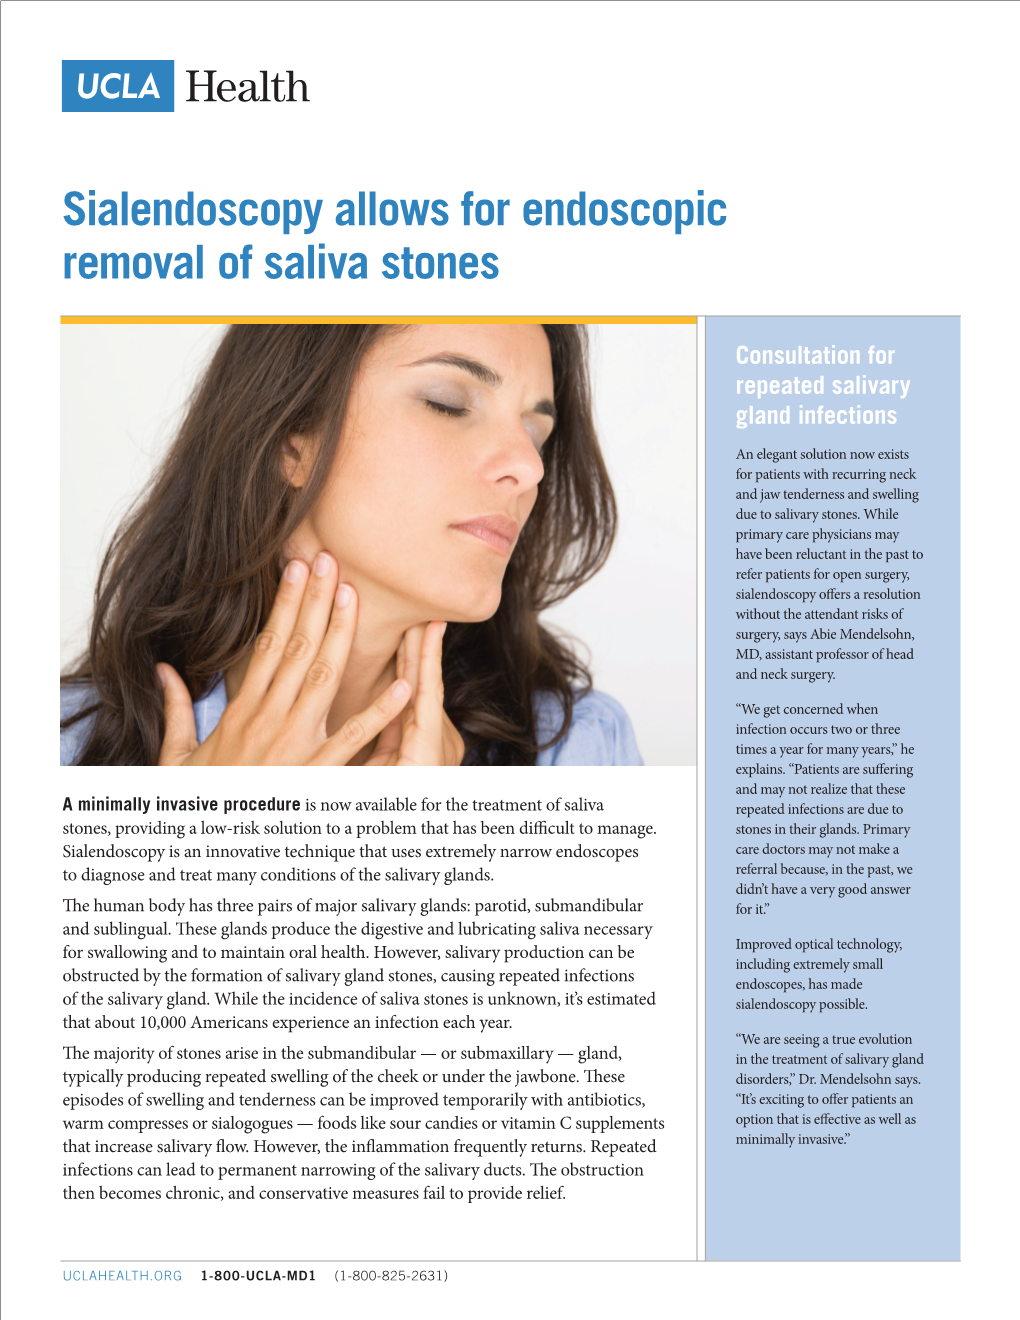 Sialendoscopy Allows for Endoscopic Removal of Saliva Stones